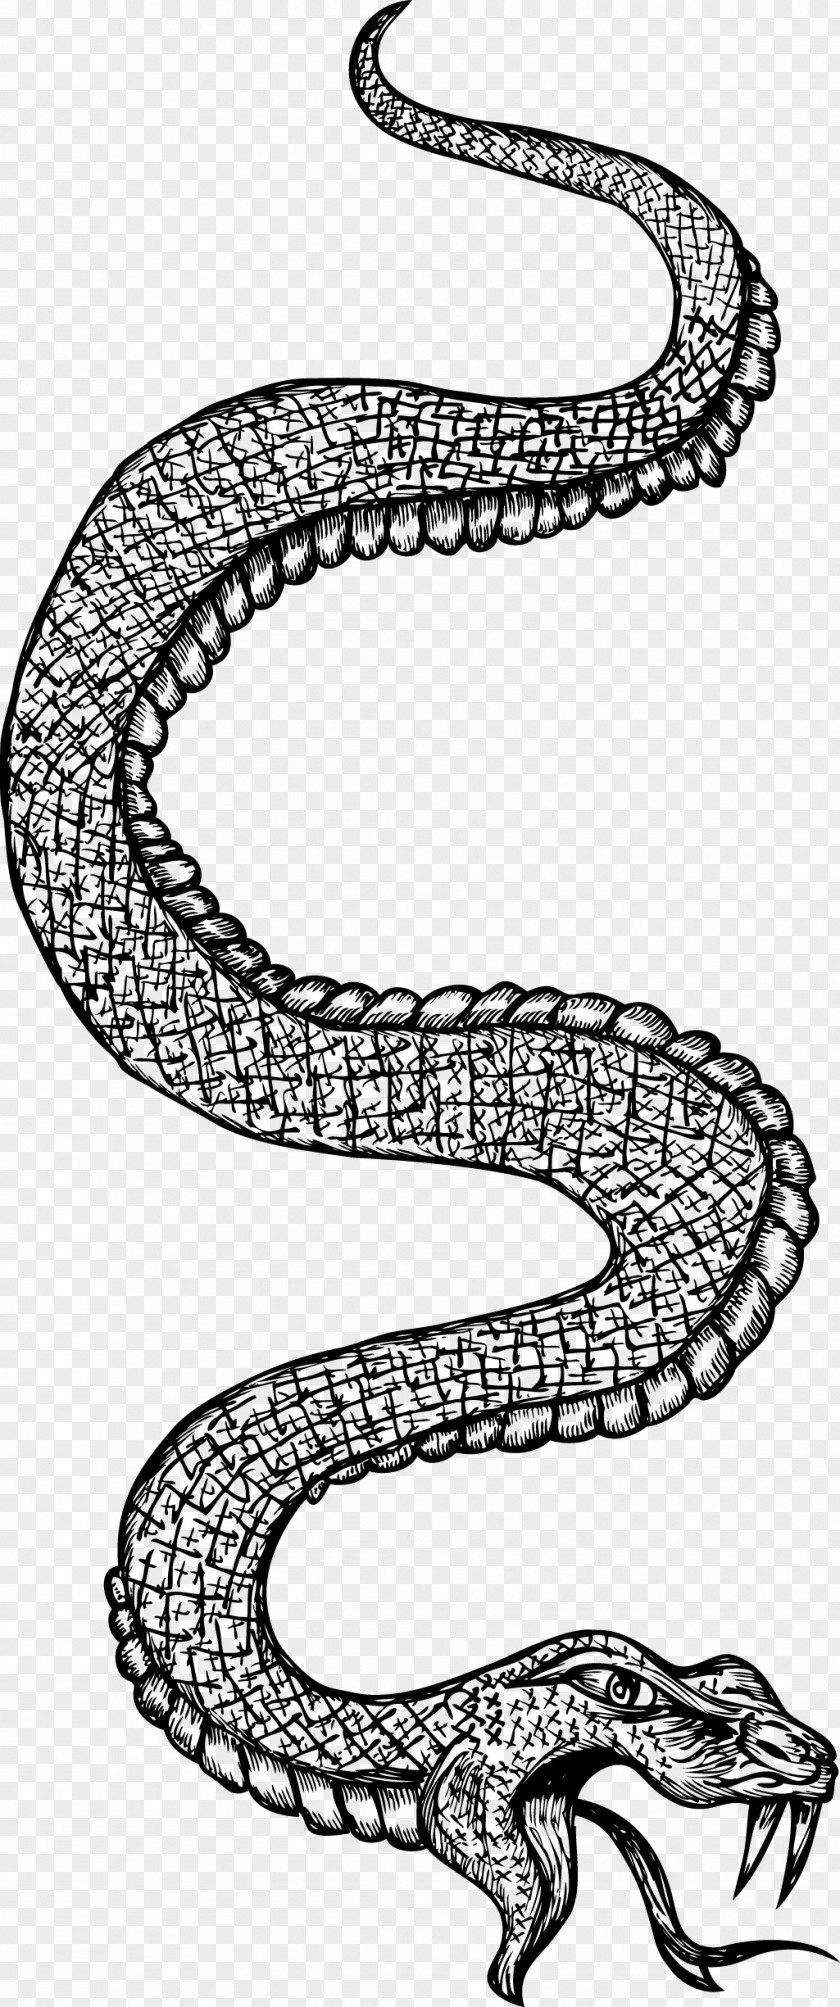 Snake Black And White Line Art PNG